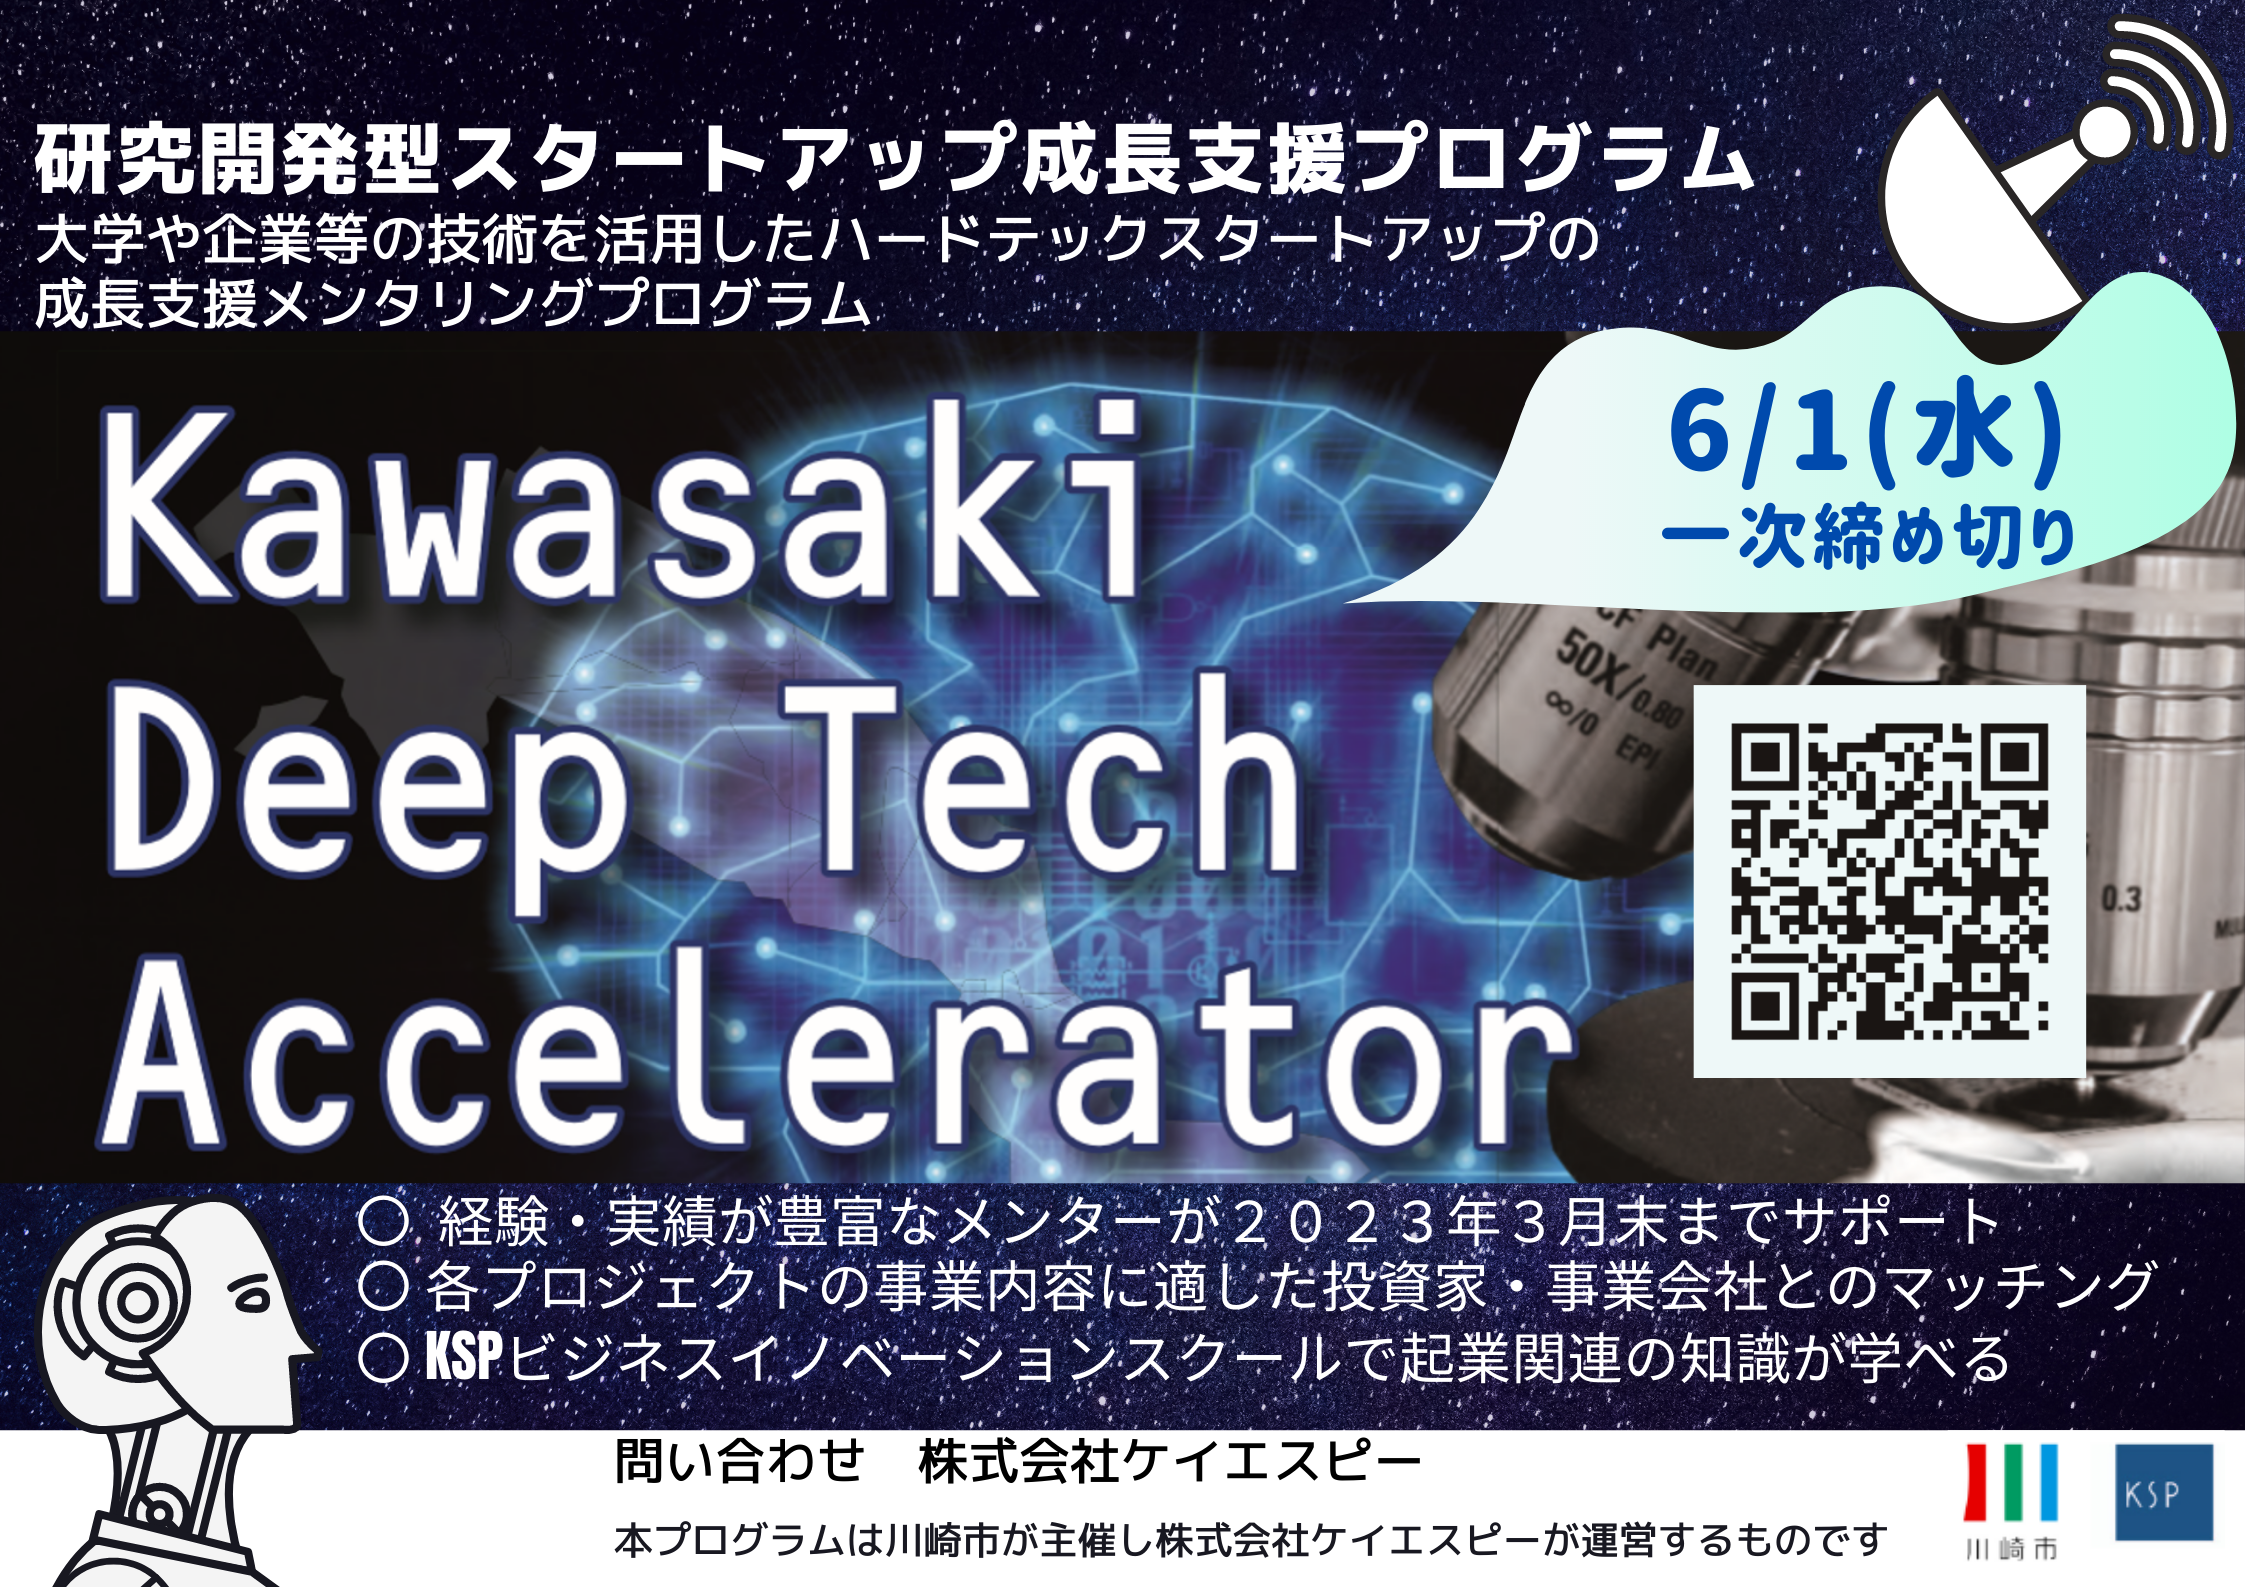 Kawasaki Deep Tech Accelerator 2022エントリー受付中